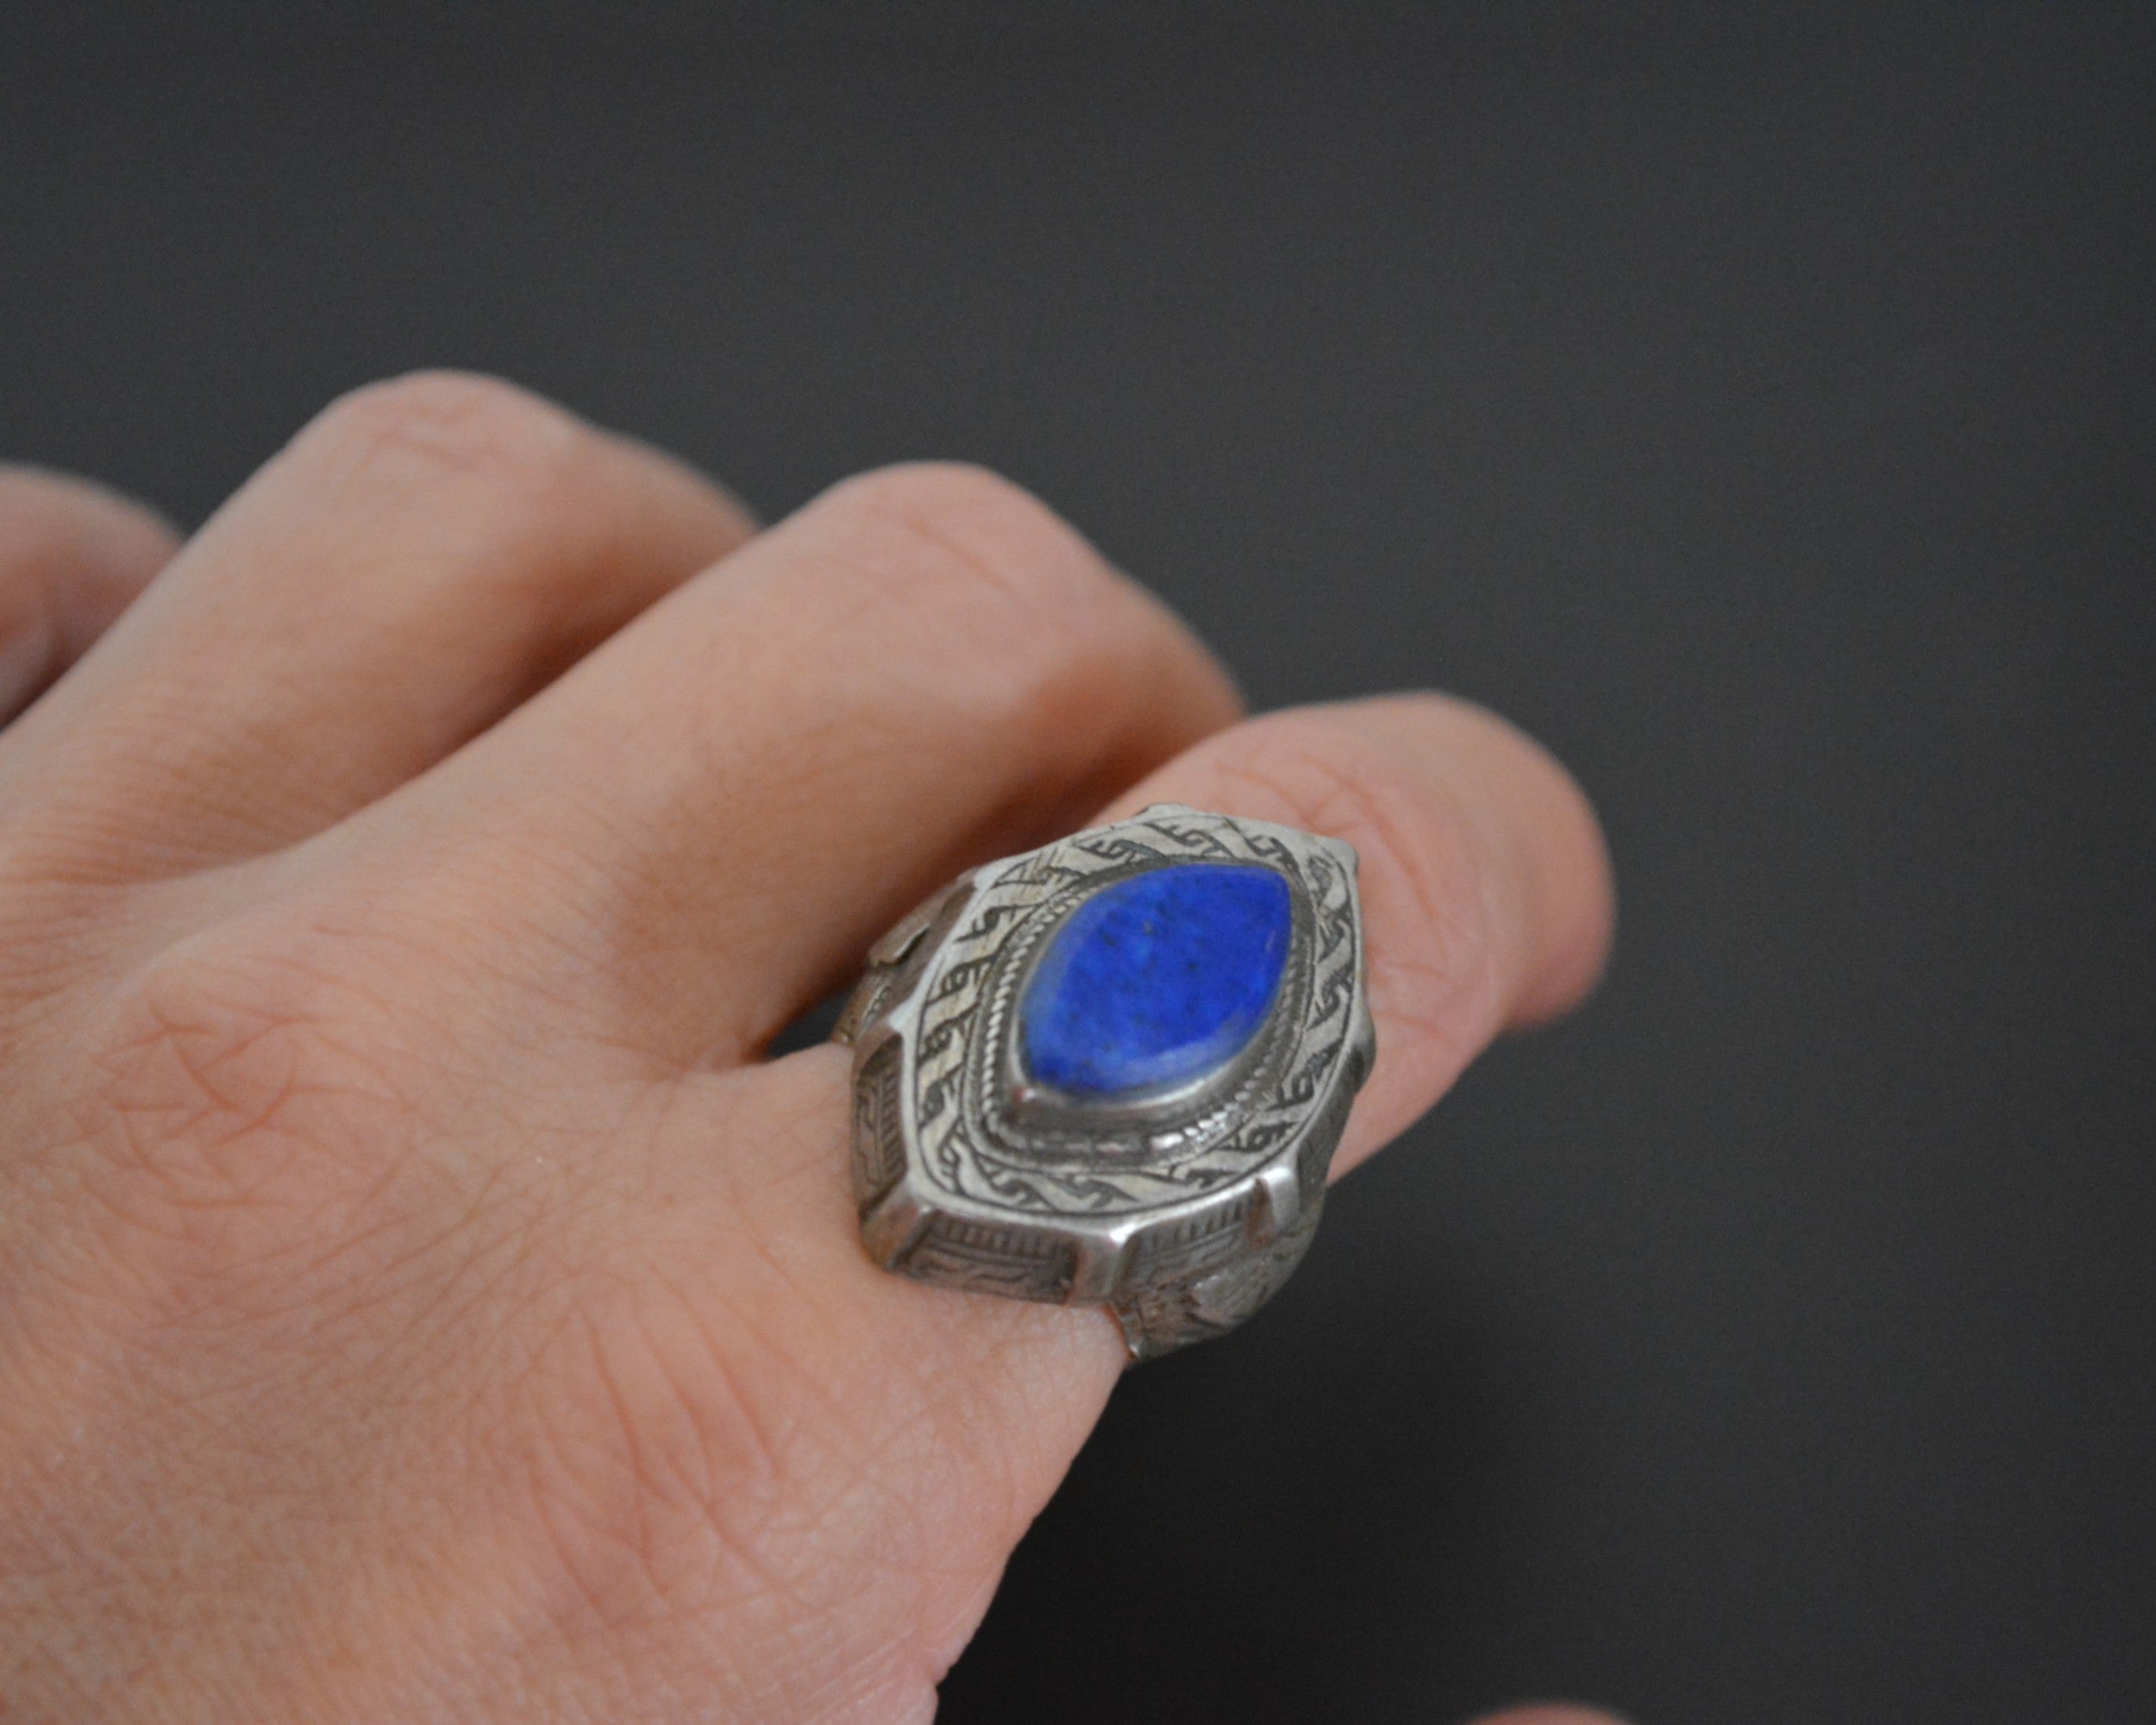 Afghani Lapis Lazuli Ring - Size 8